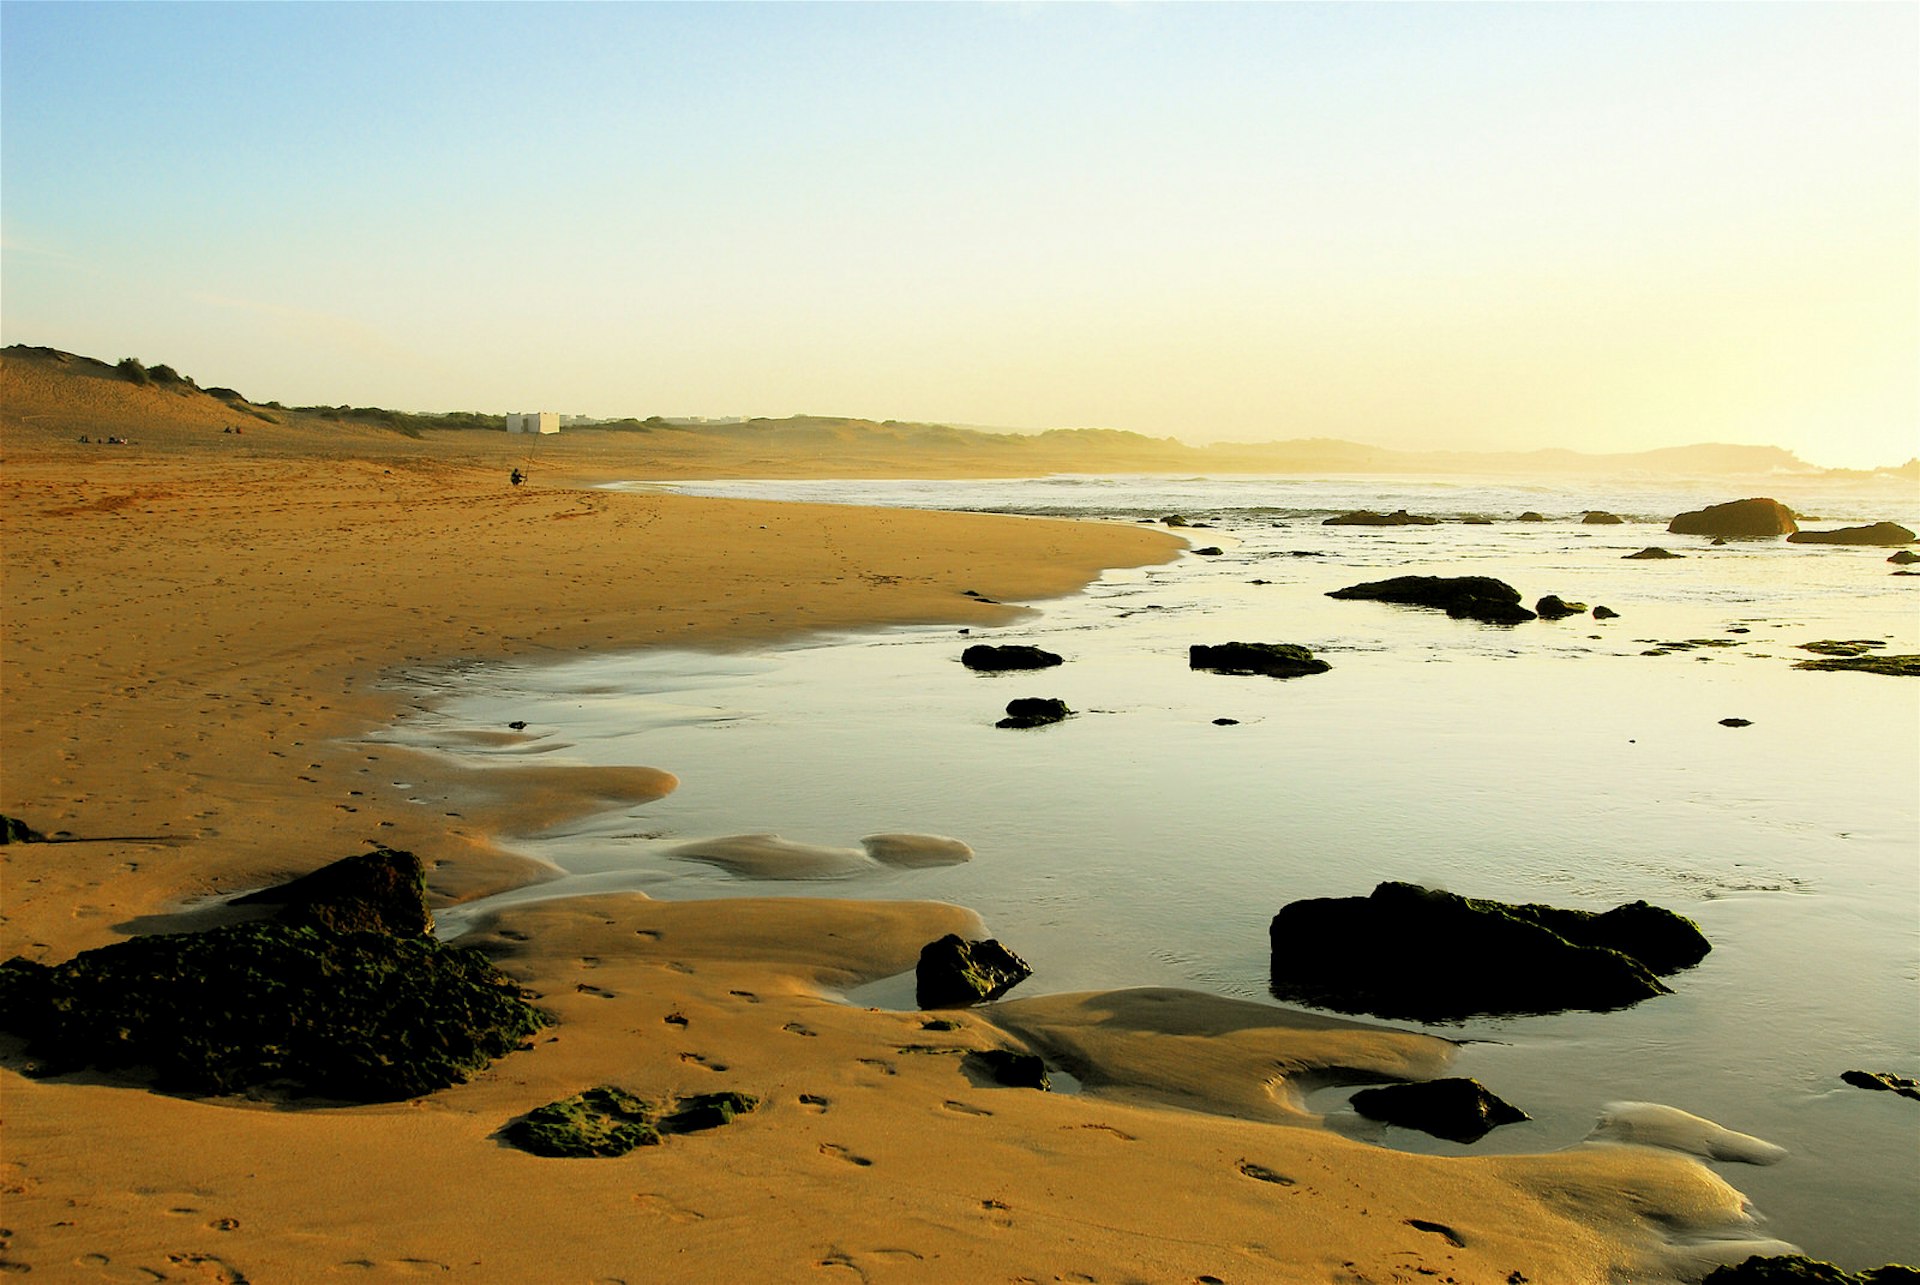 Seaside at Oualidia, Atlantic Coast, Morocco © Doelan Yann / Getty Images